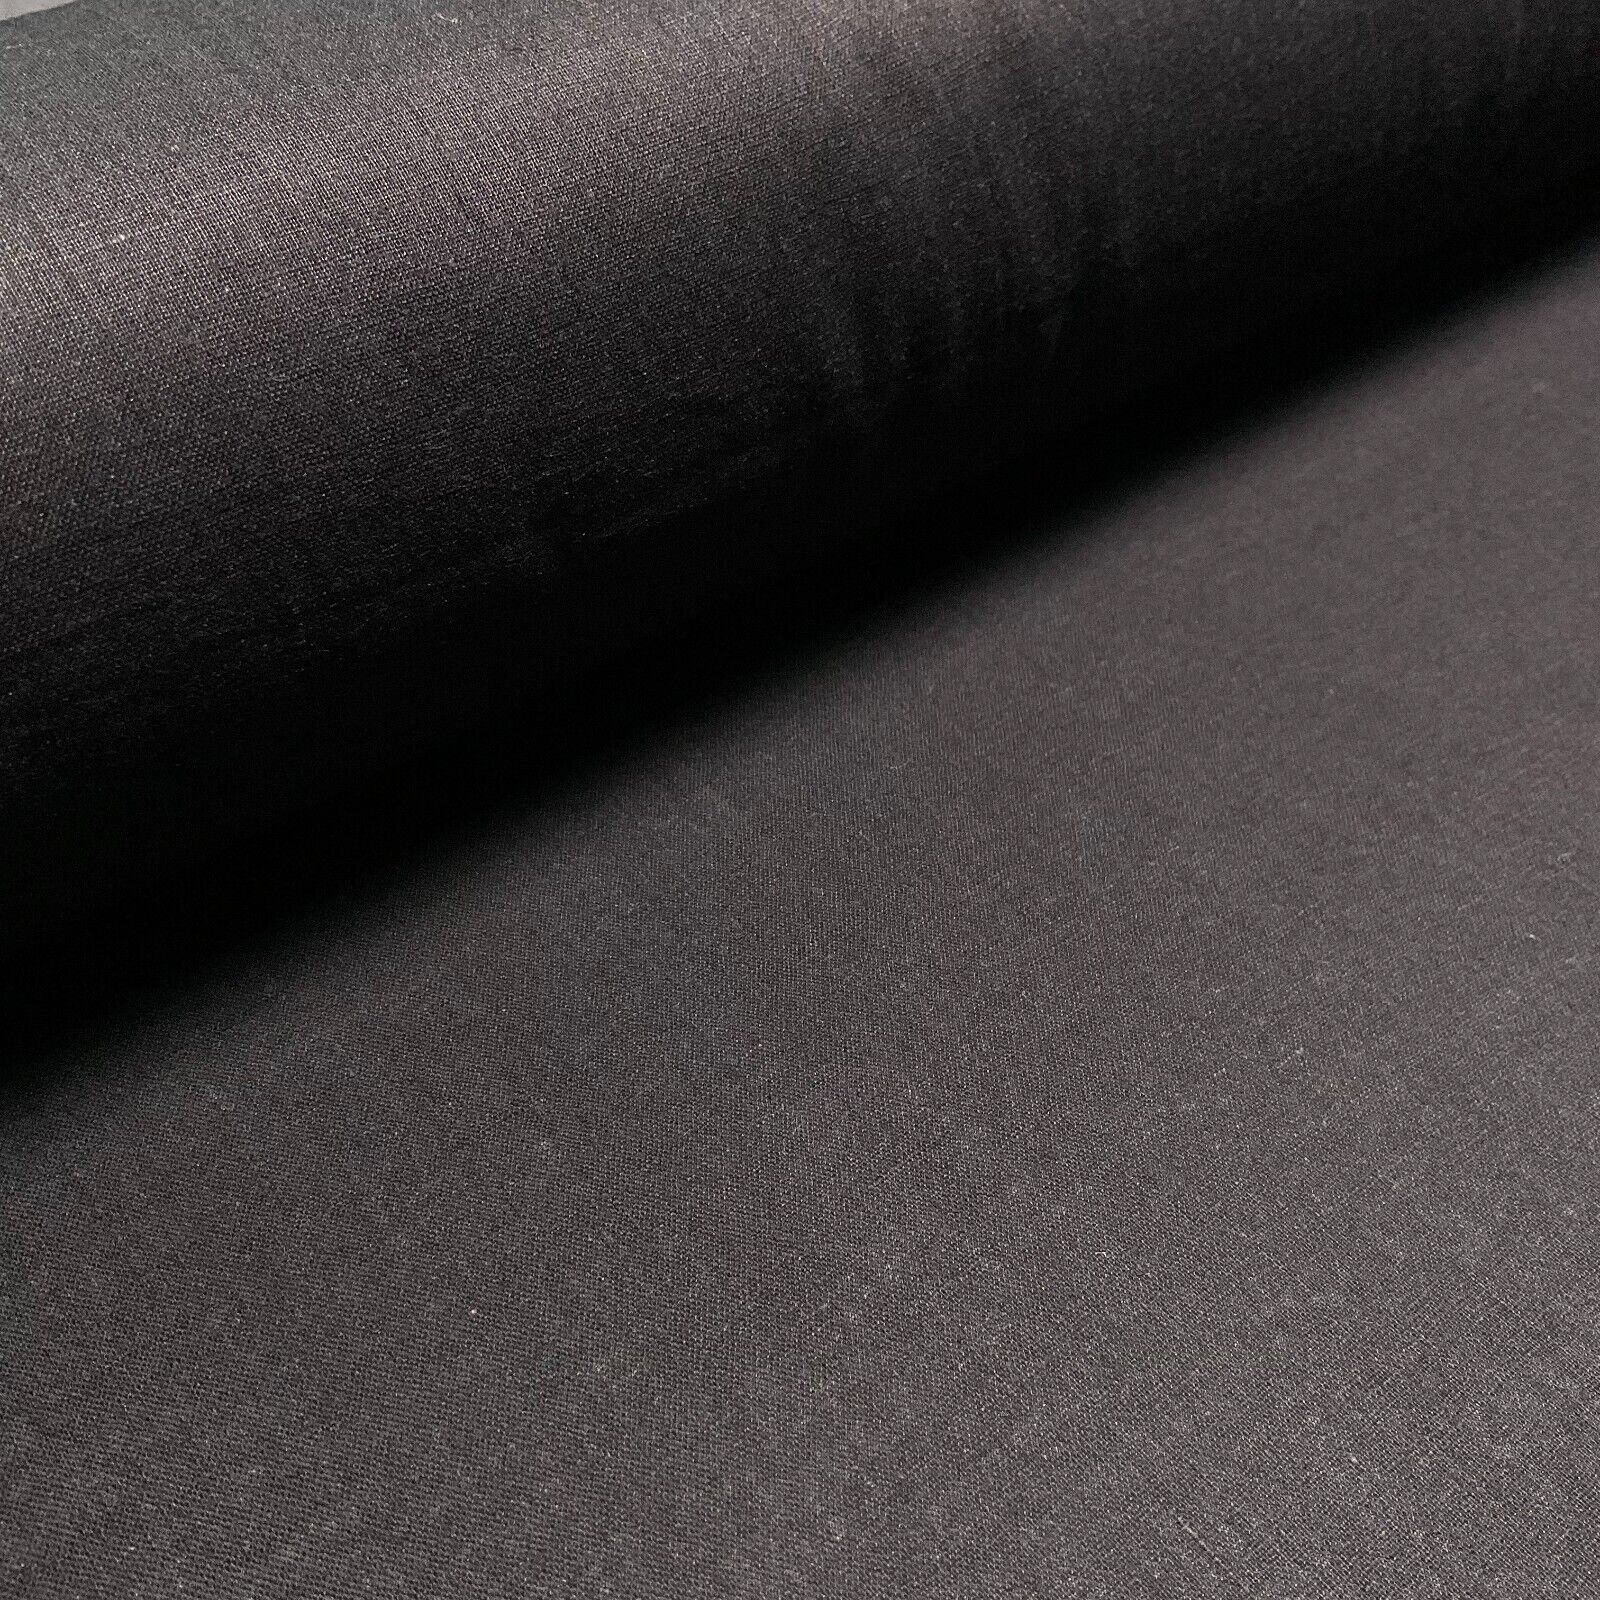 Plain Superfine cotton voile lightweight sewing lining dressmaking fabric M1553